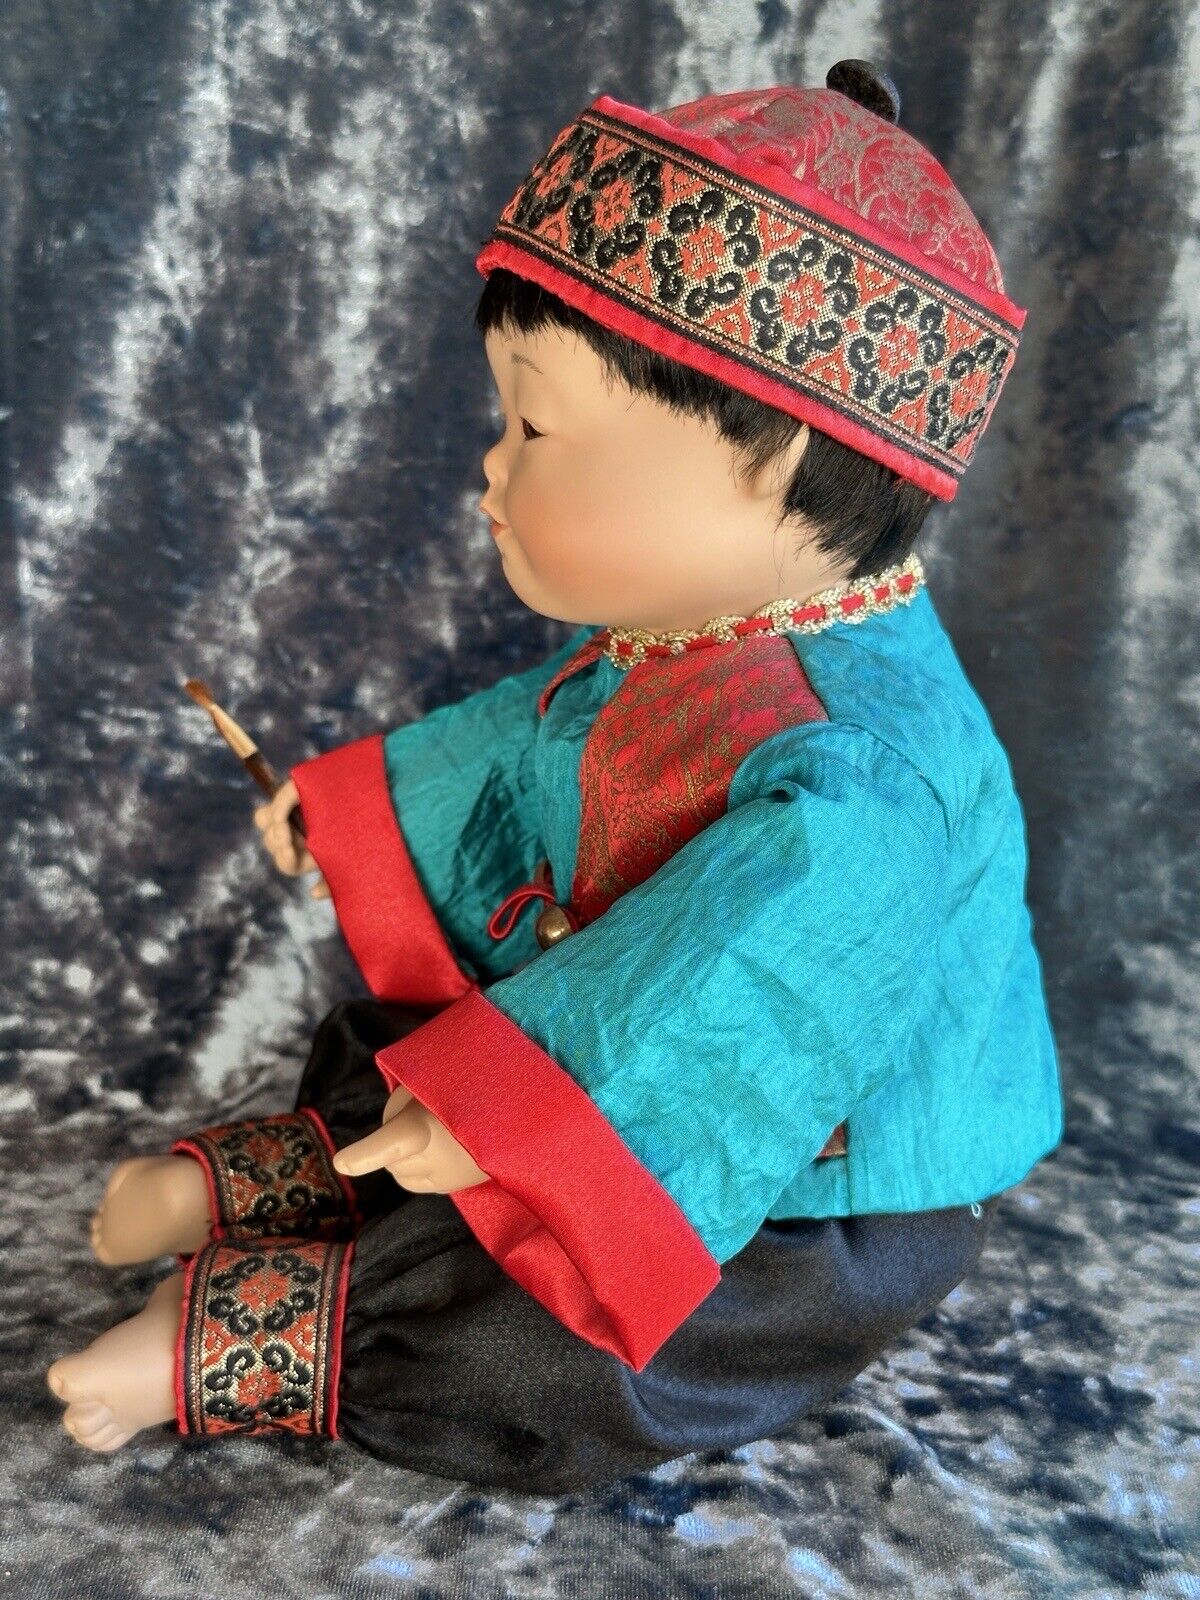 Collectible Porcelain Oriental Dolls by Yolanda Bello for Ashton Drake